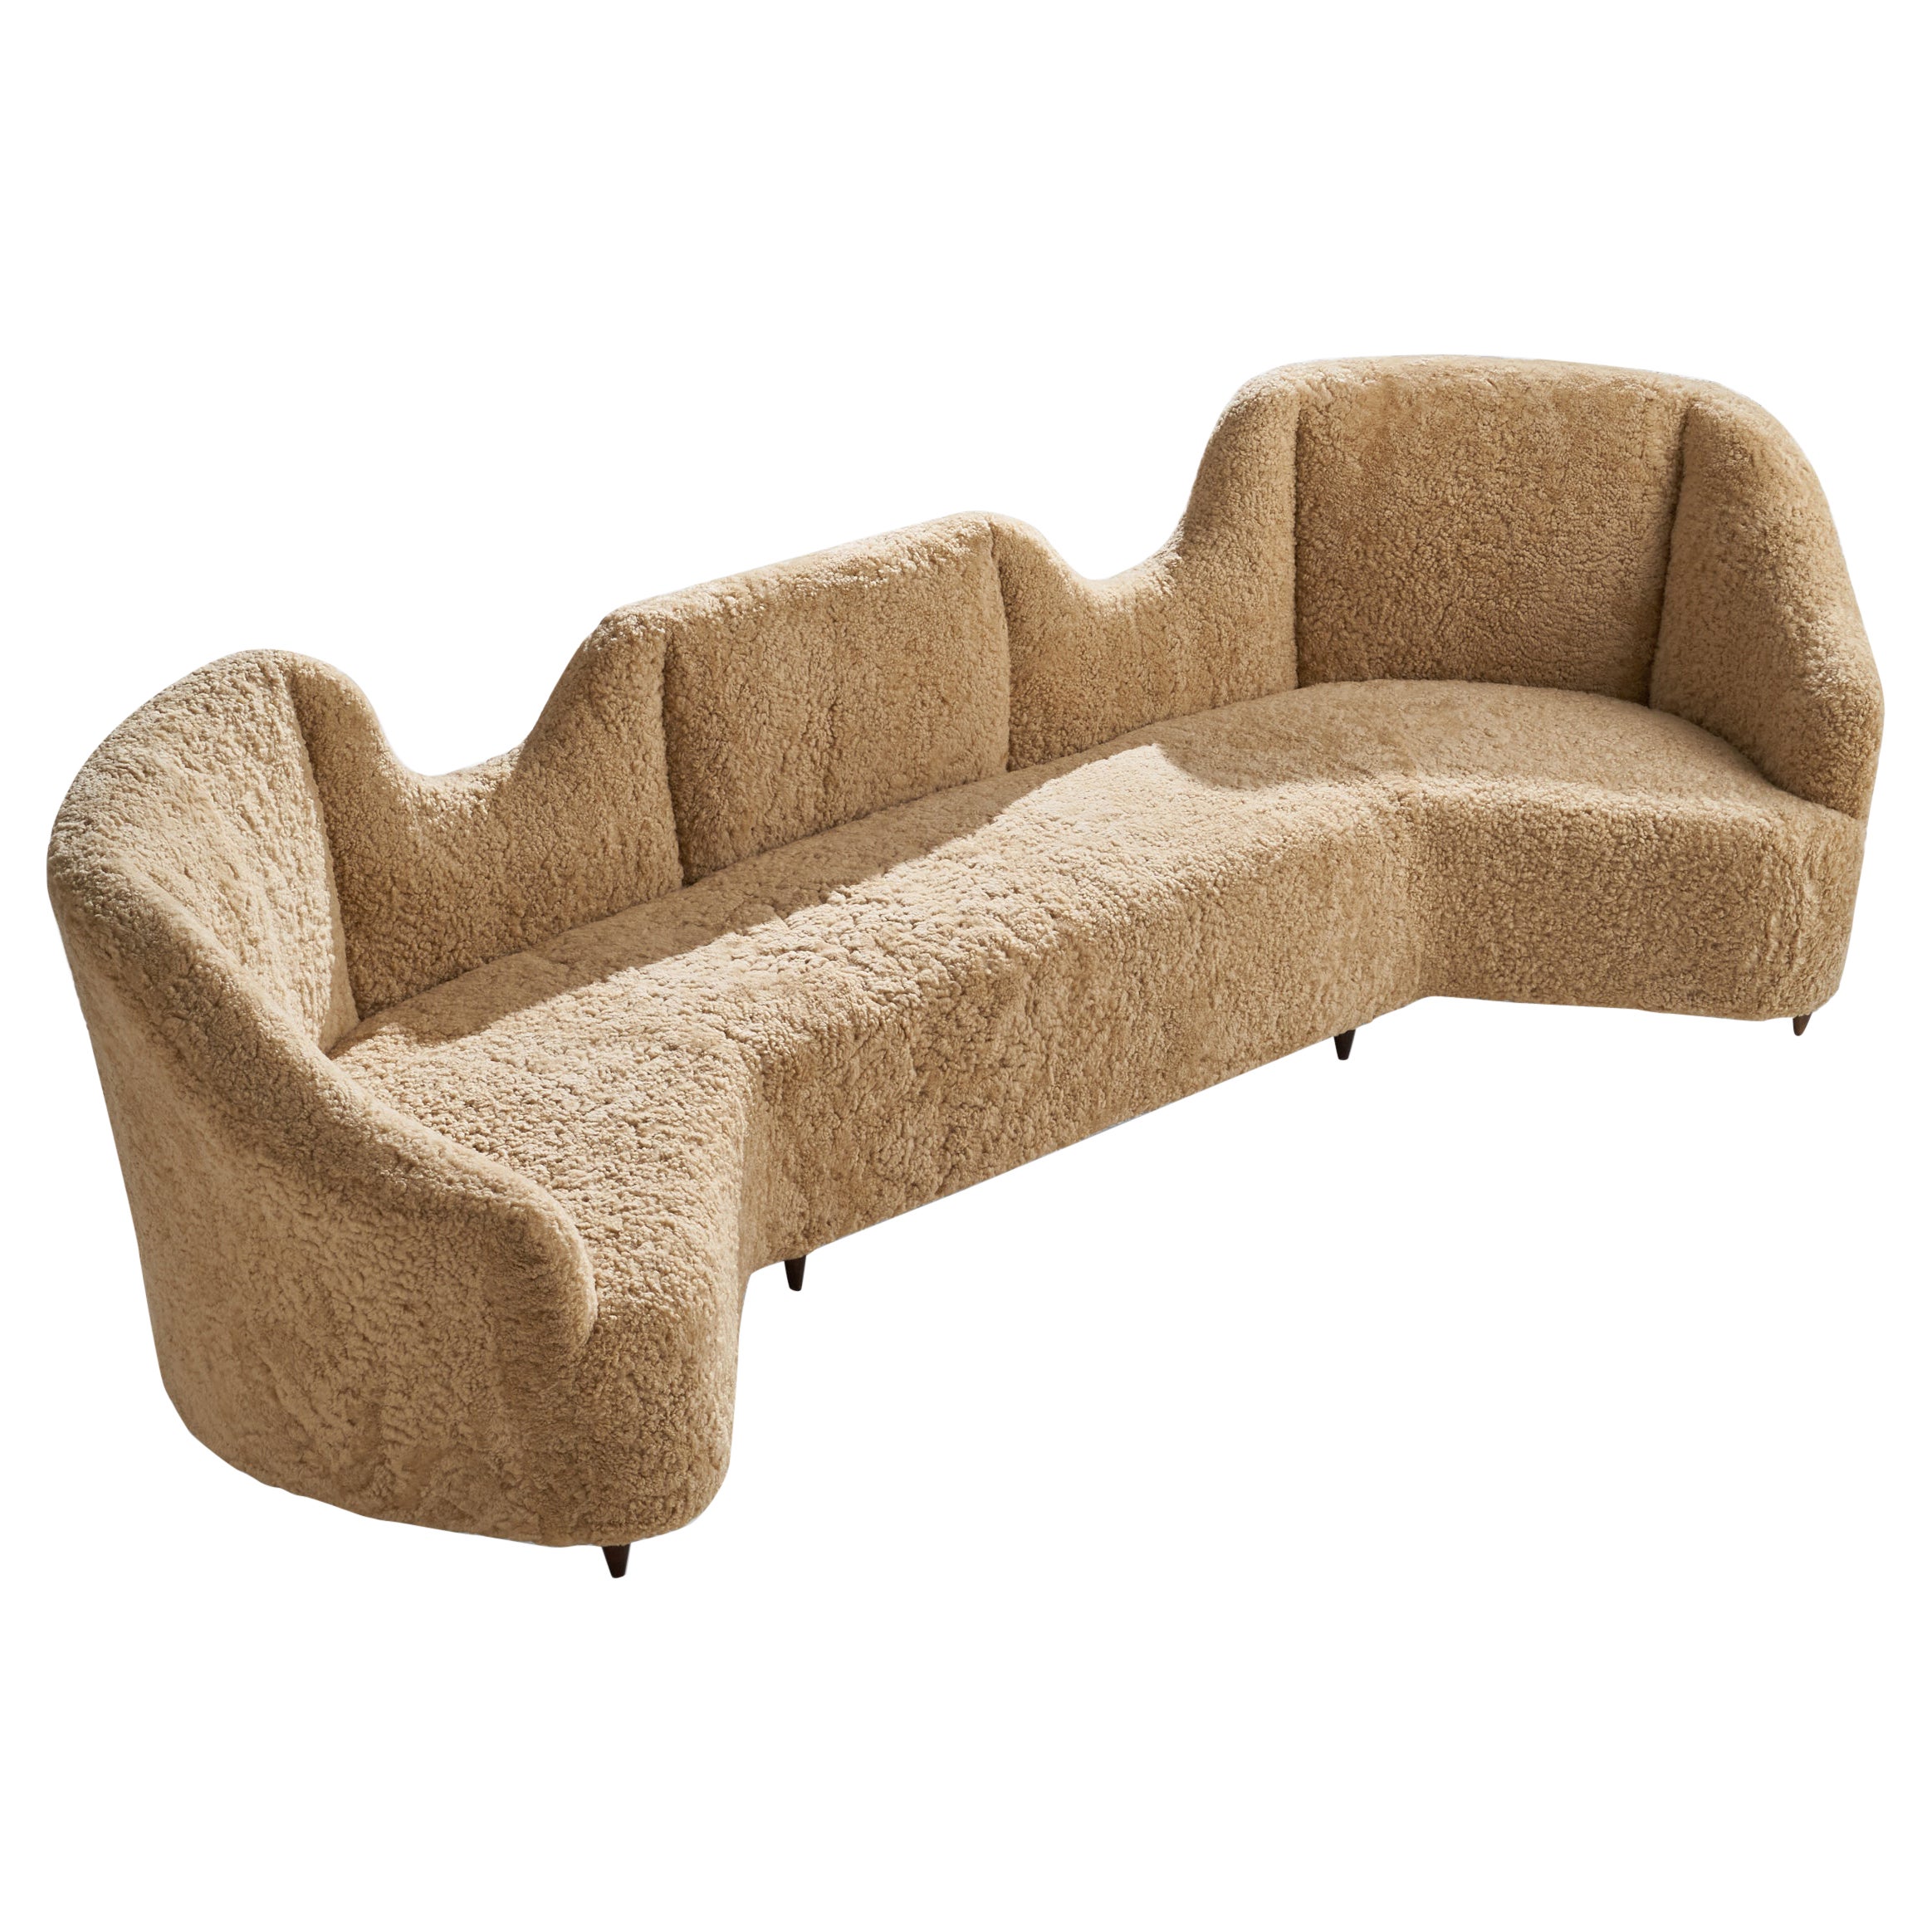 Renzo Zavanella Attribution, Large Sofa, Shearling, Wood, Italy, 1940s. For Sale